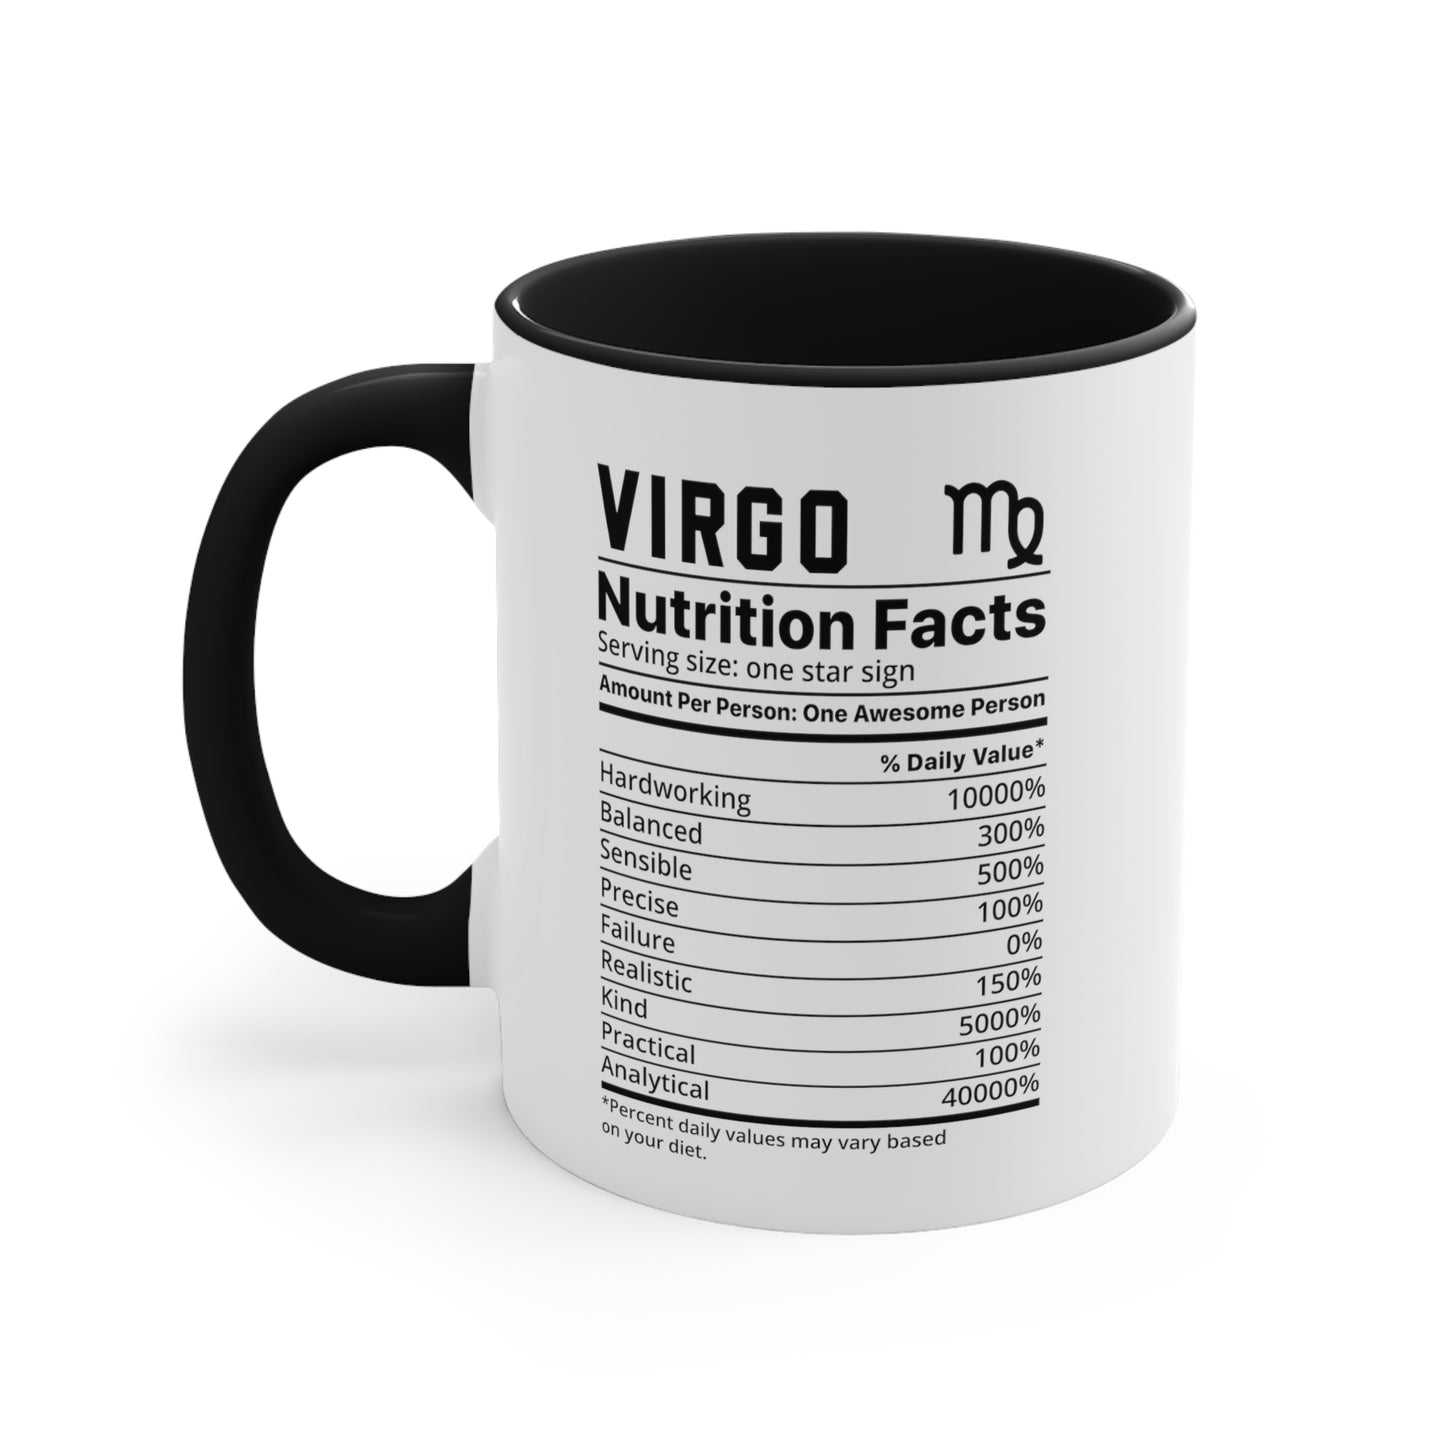 Virgo Star Sign Nutrition Facts White Black Accent Ceramic Mugs 11oz,  Zodiac, Astrology, Celestial, coffee mug, tea cup, joke, funny, humorous, fun